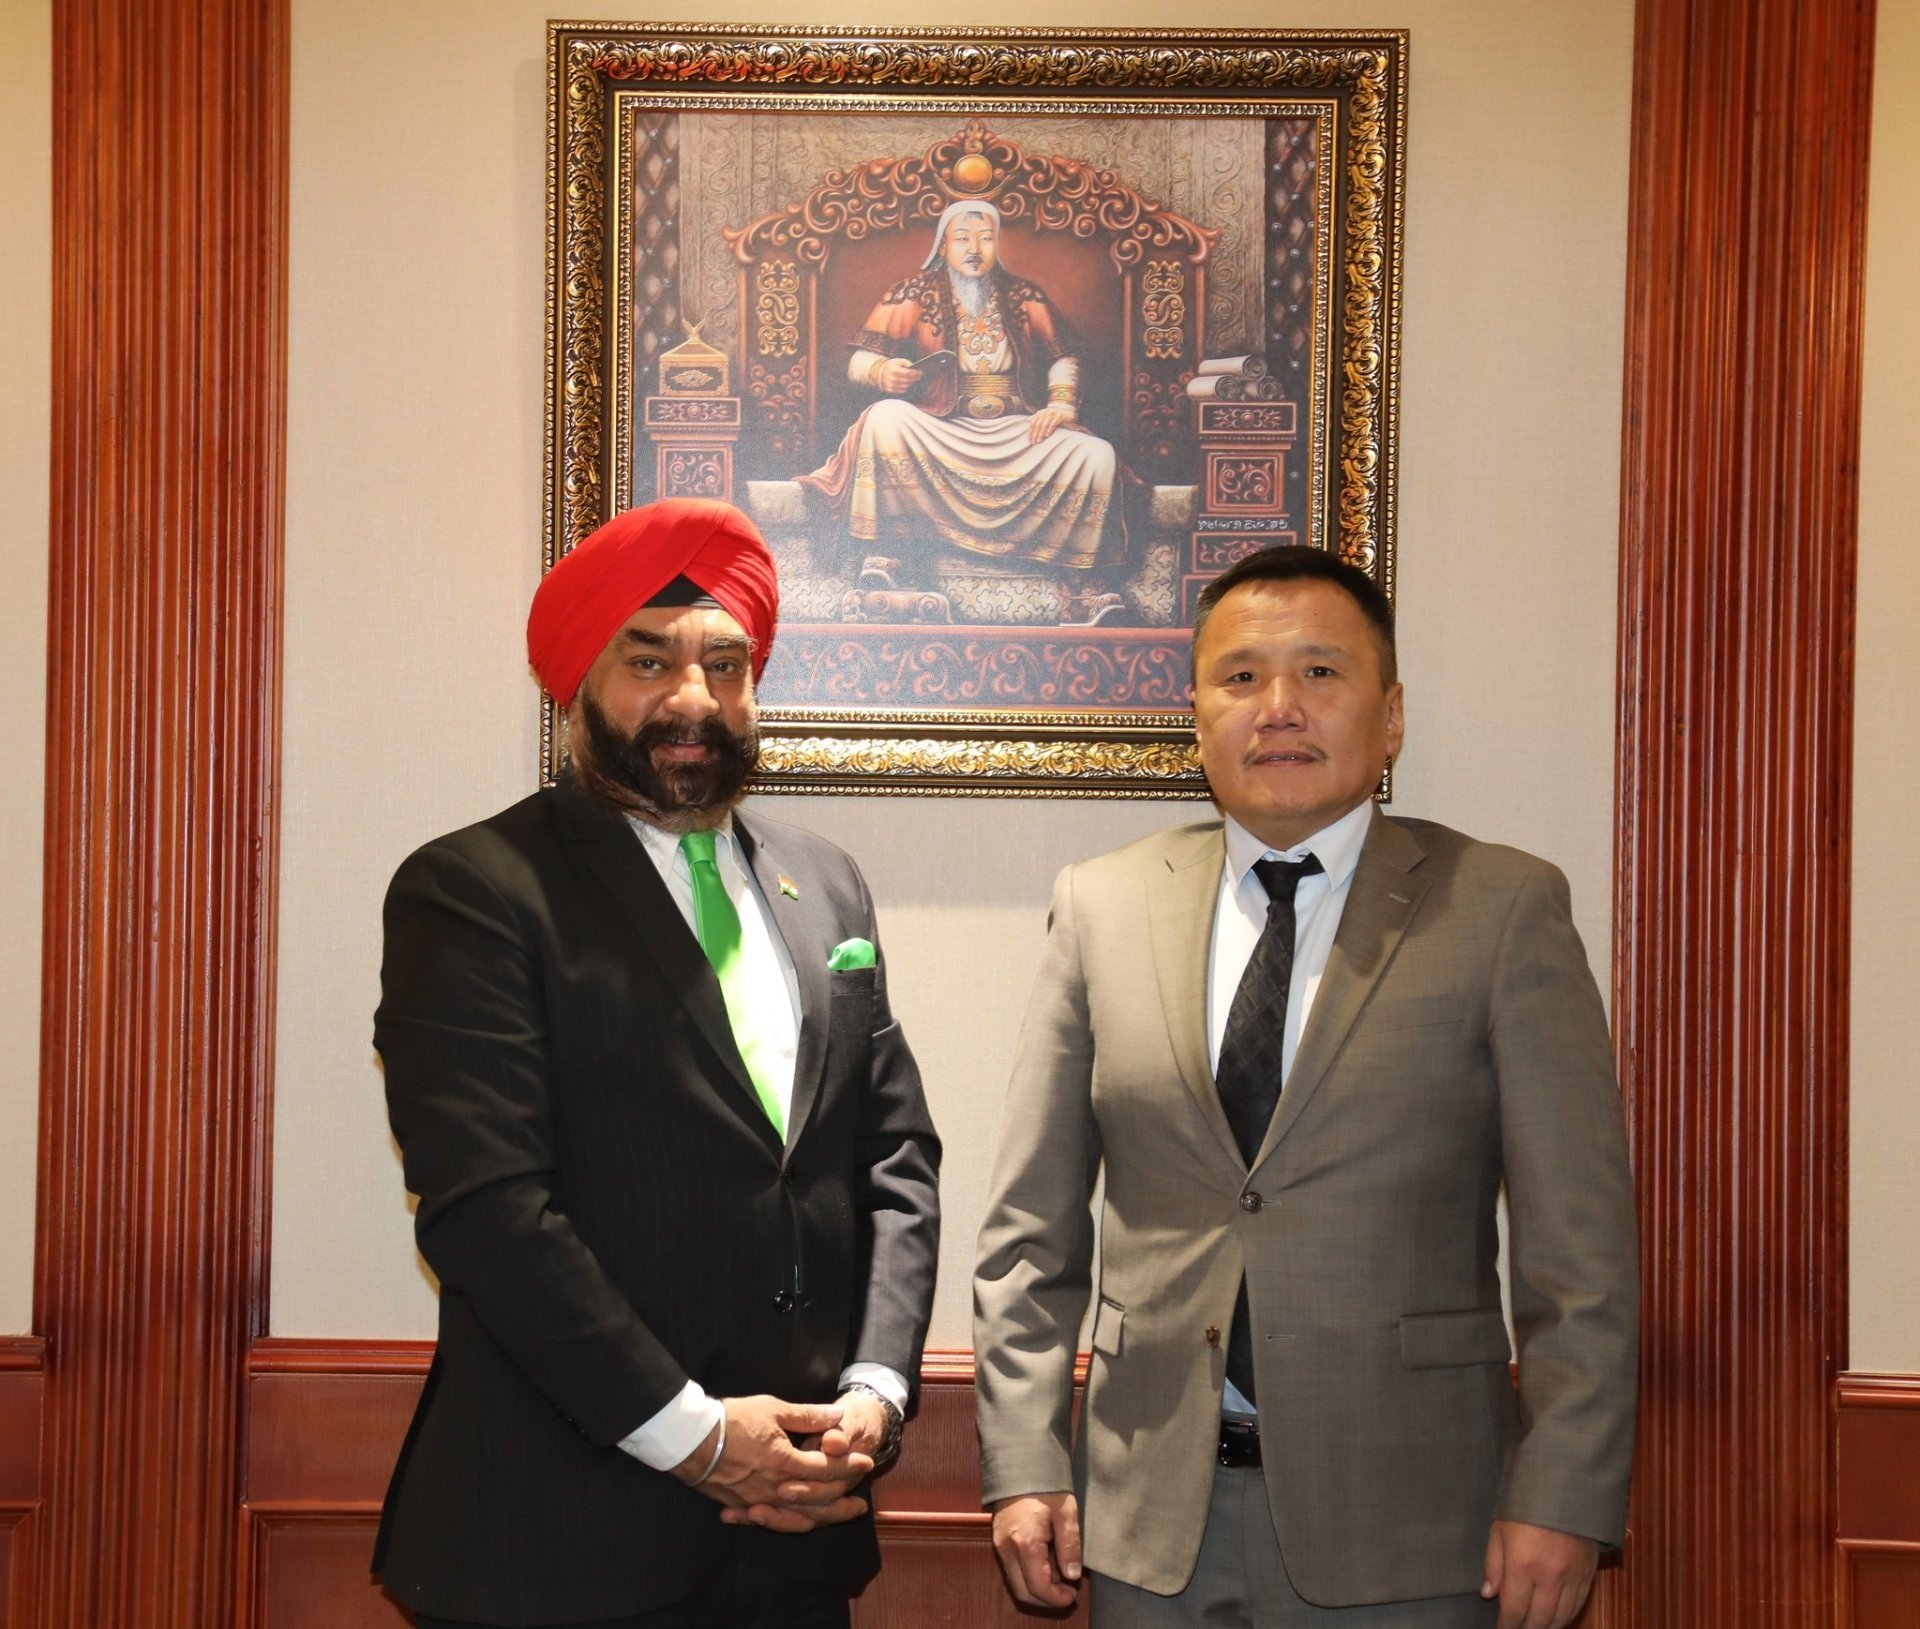 Indian Ambassador H.E Mohinder Pratap Singh visited the IAAC